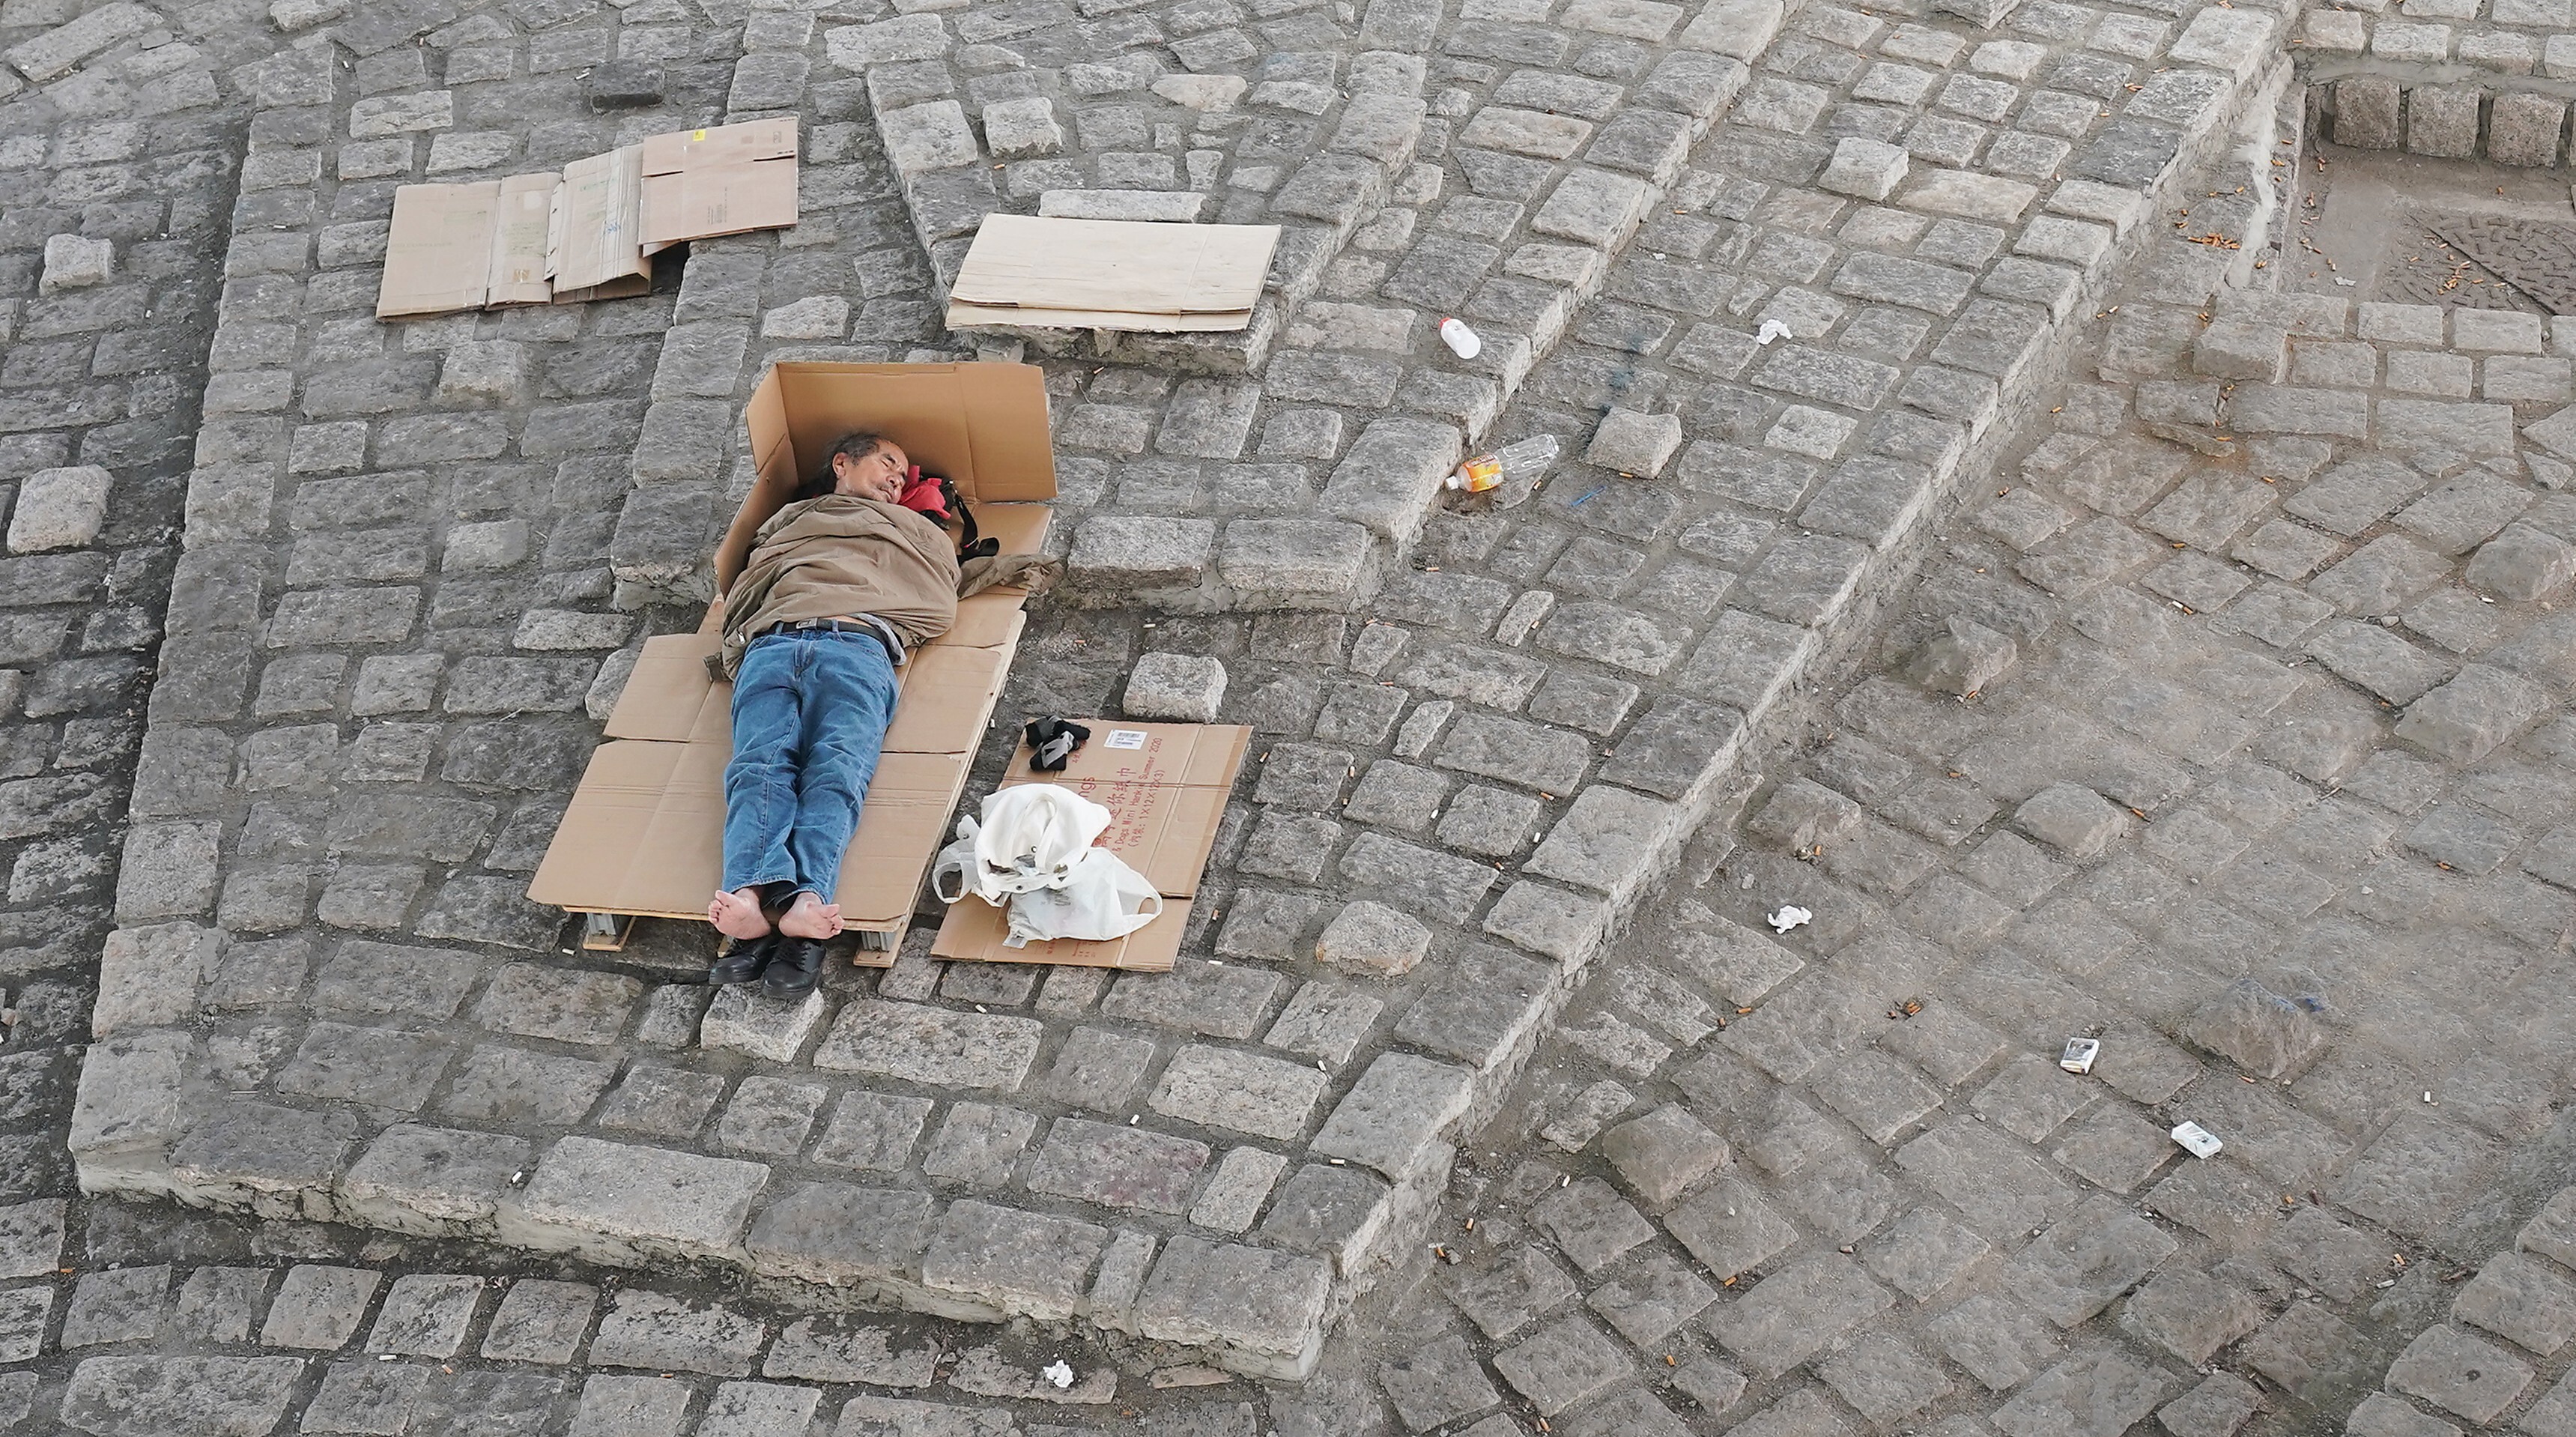 A homeless man sleeps on the ground in Sheung Wan, Hong Kong, on July 25. Photo: Felix Wong